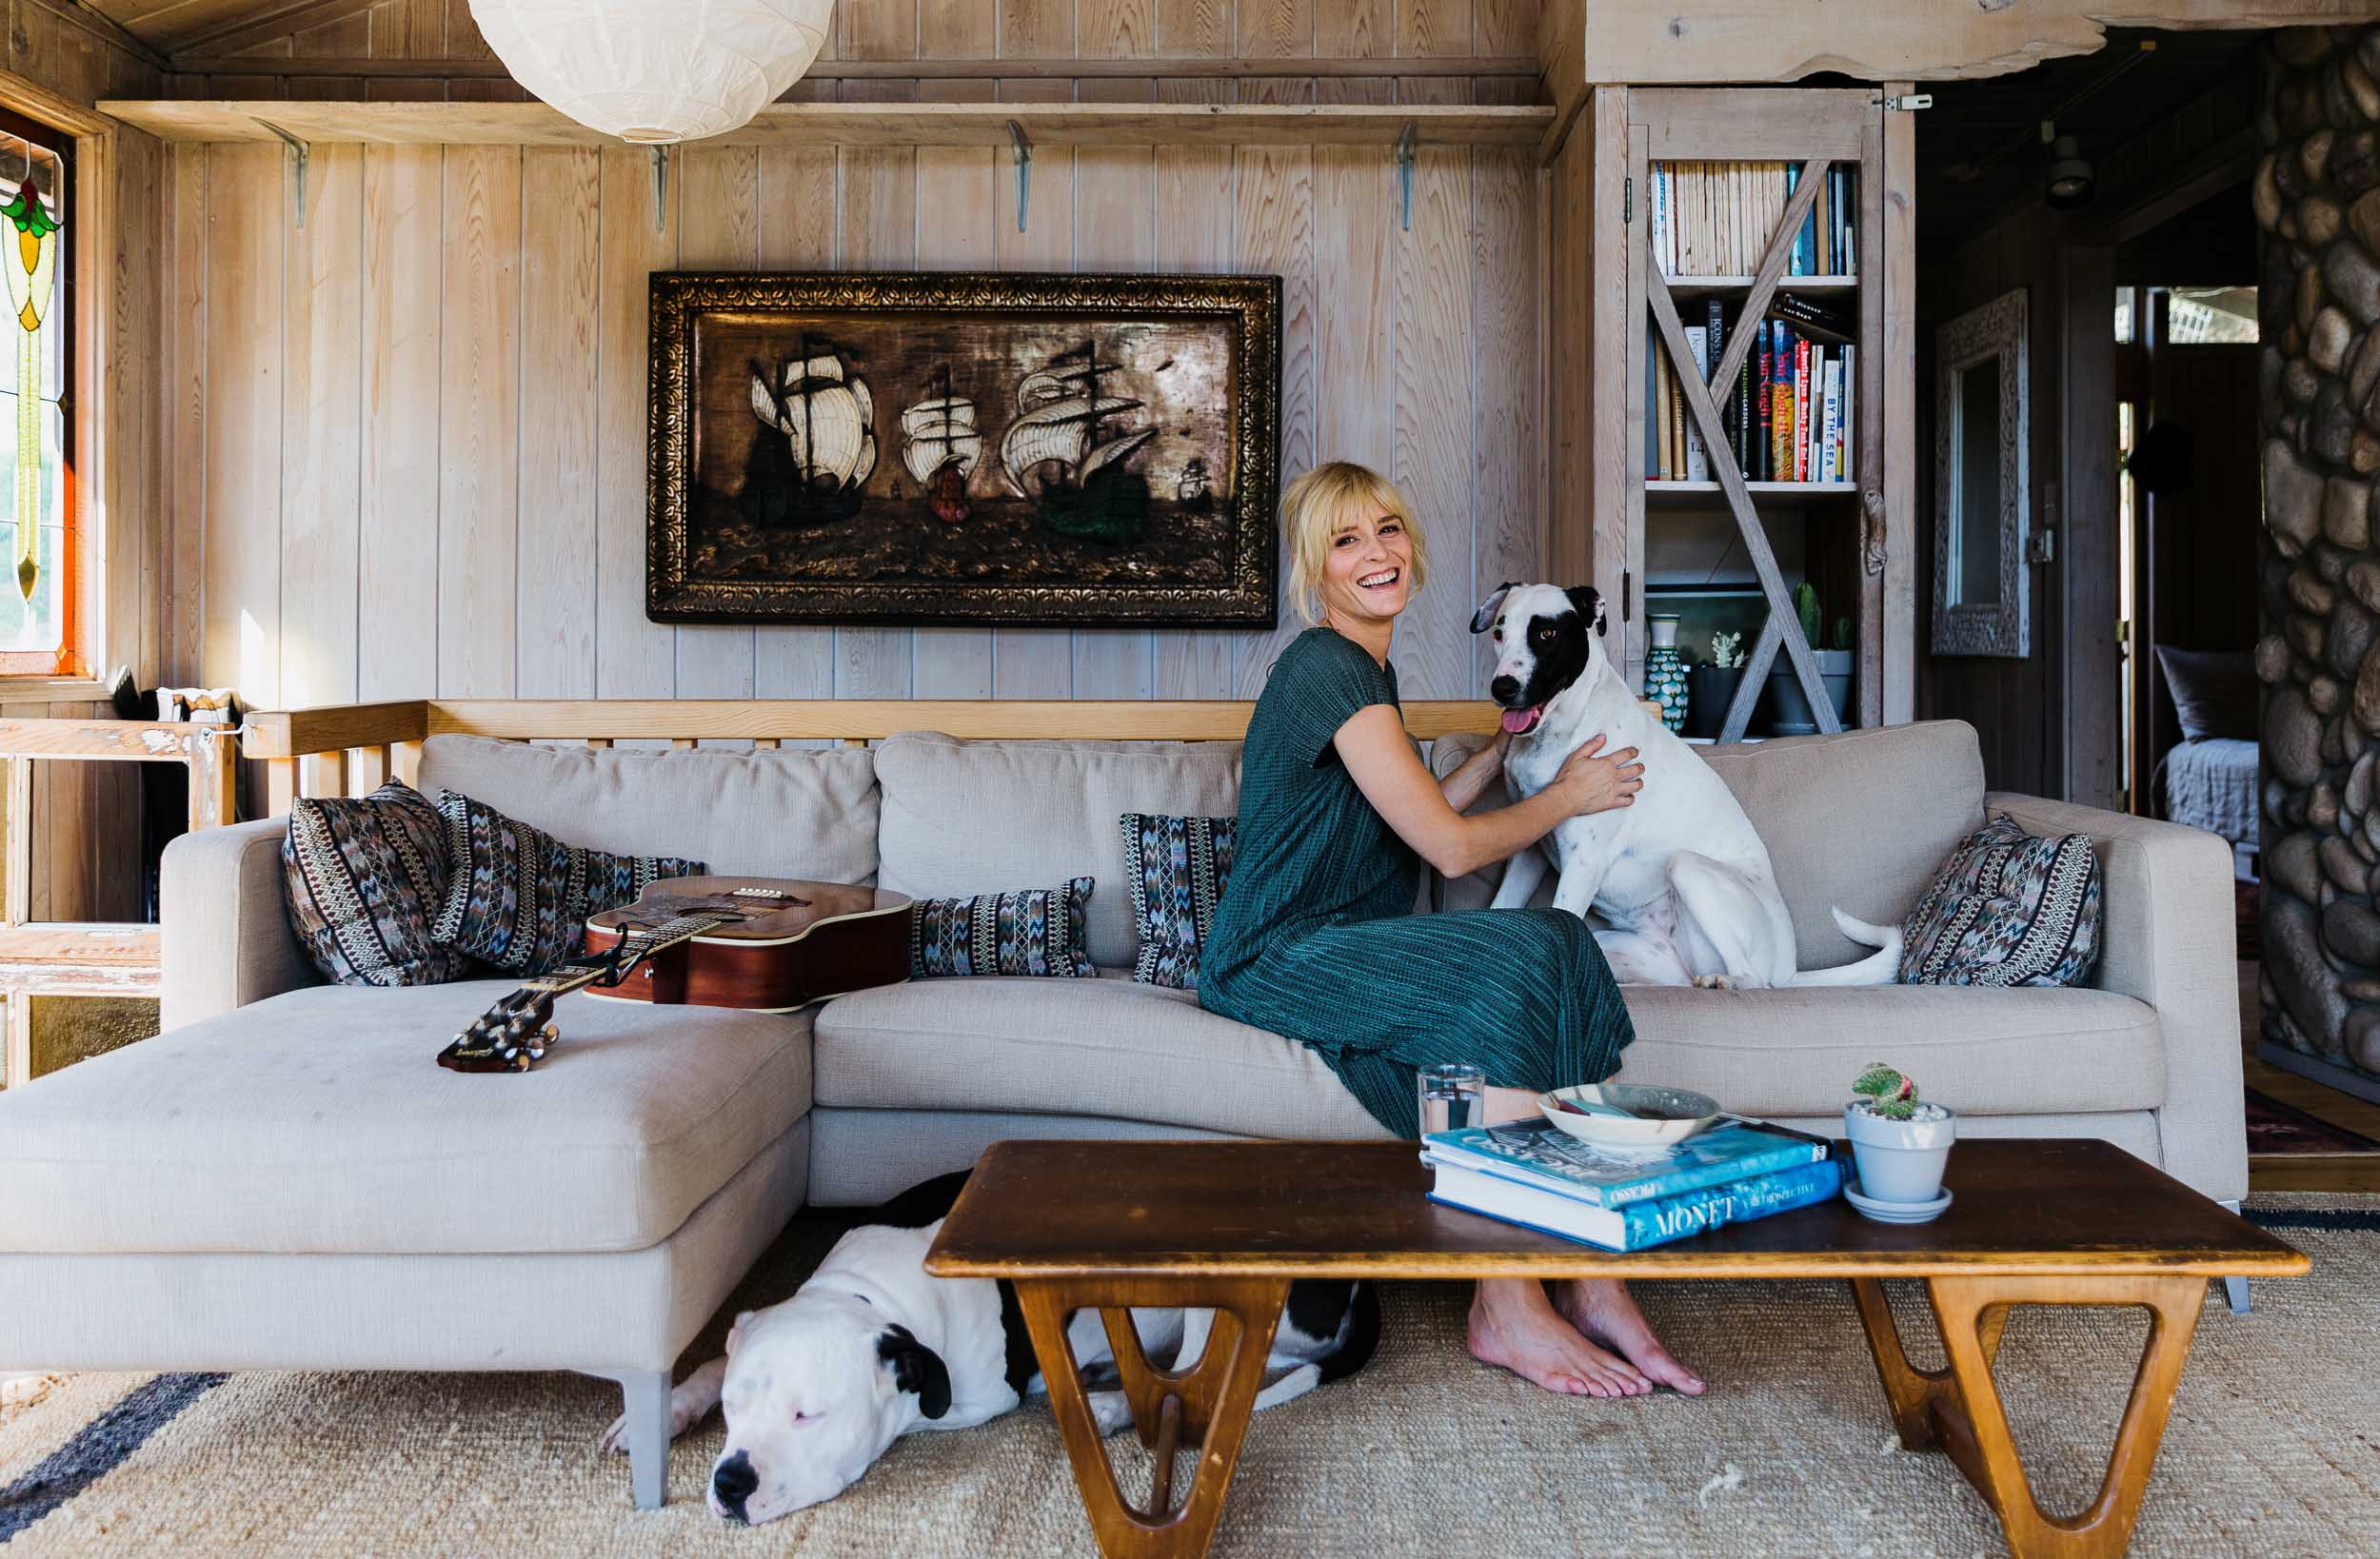 Musician Marnie Herald in her living room wiht her dog.